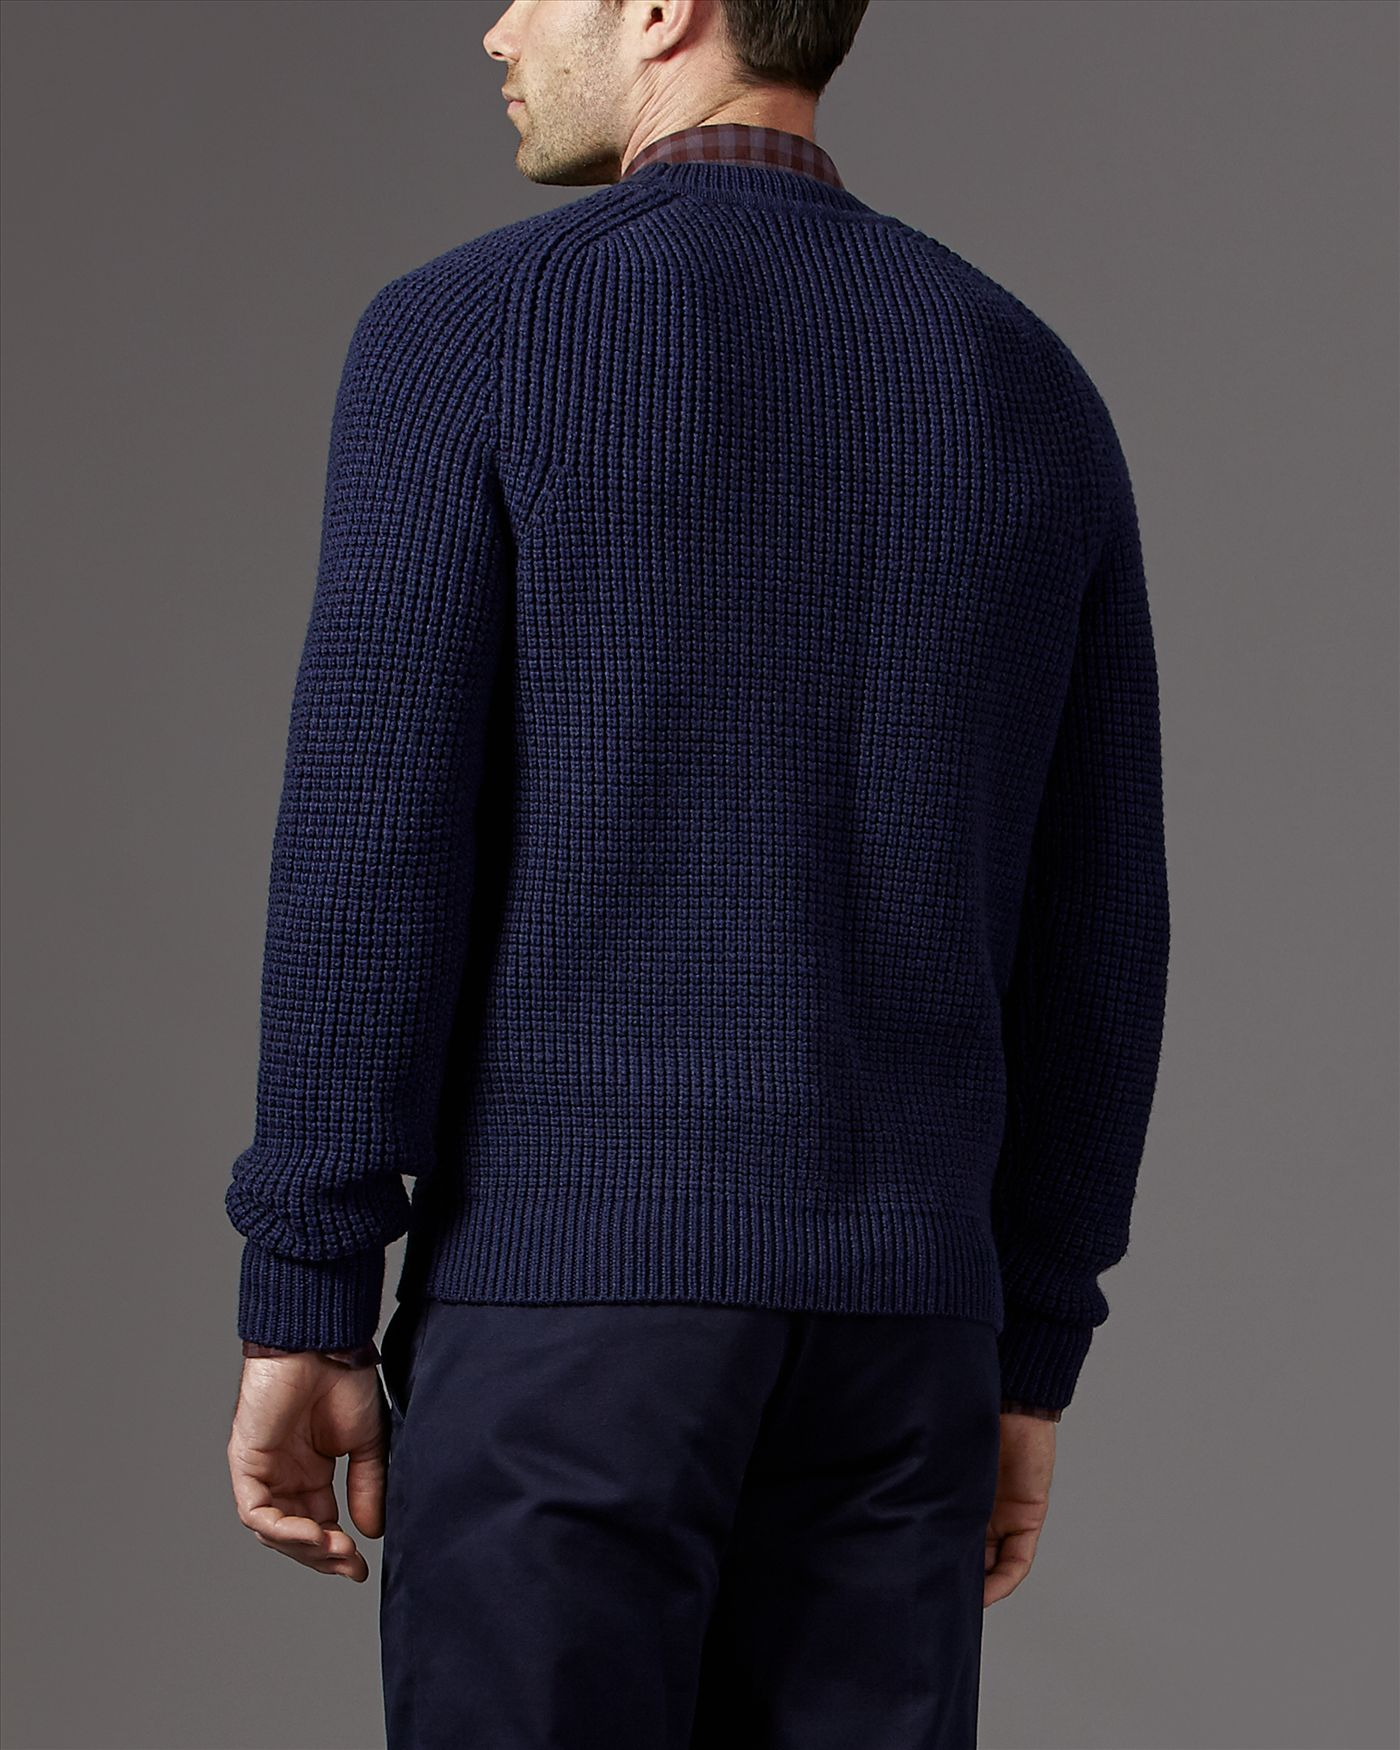 Lyst - Jaeger Wool Double Tuck Sweater in Blue for Men